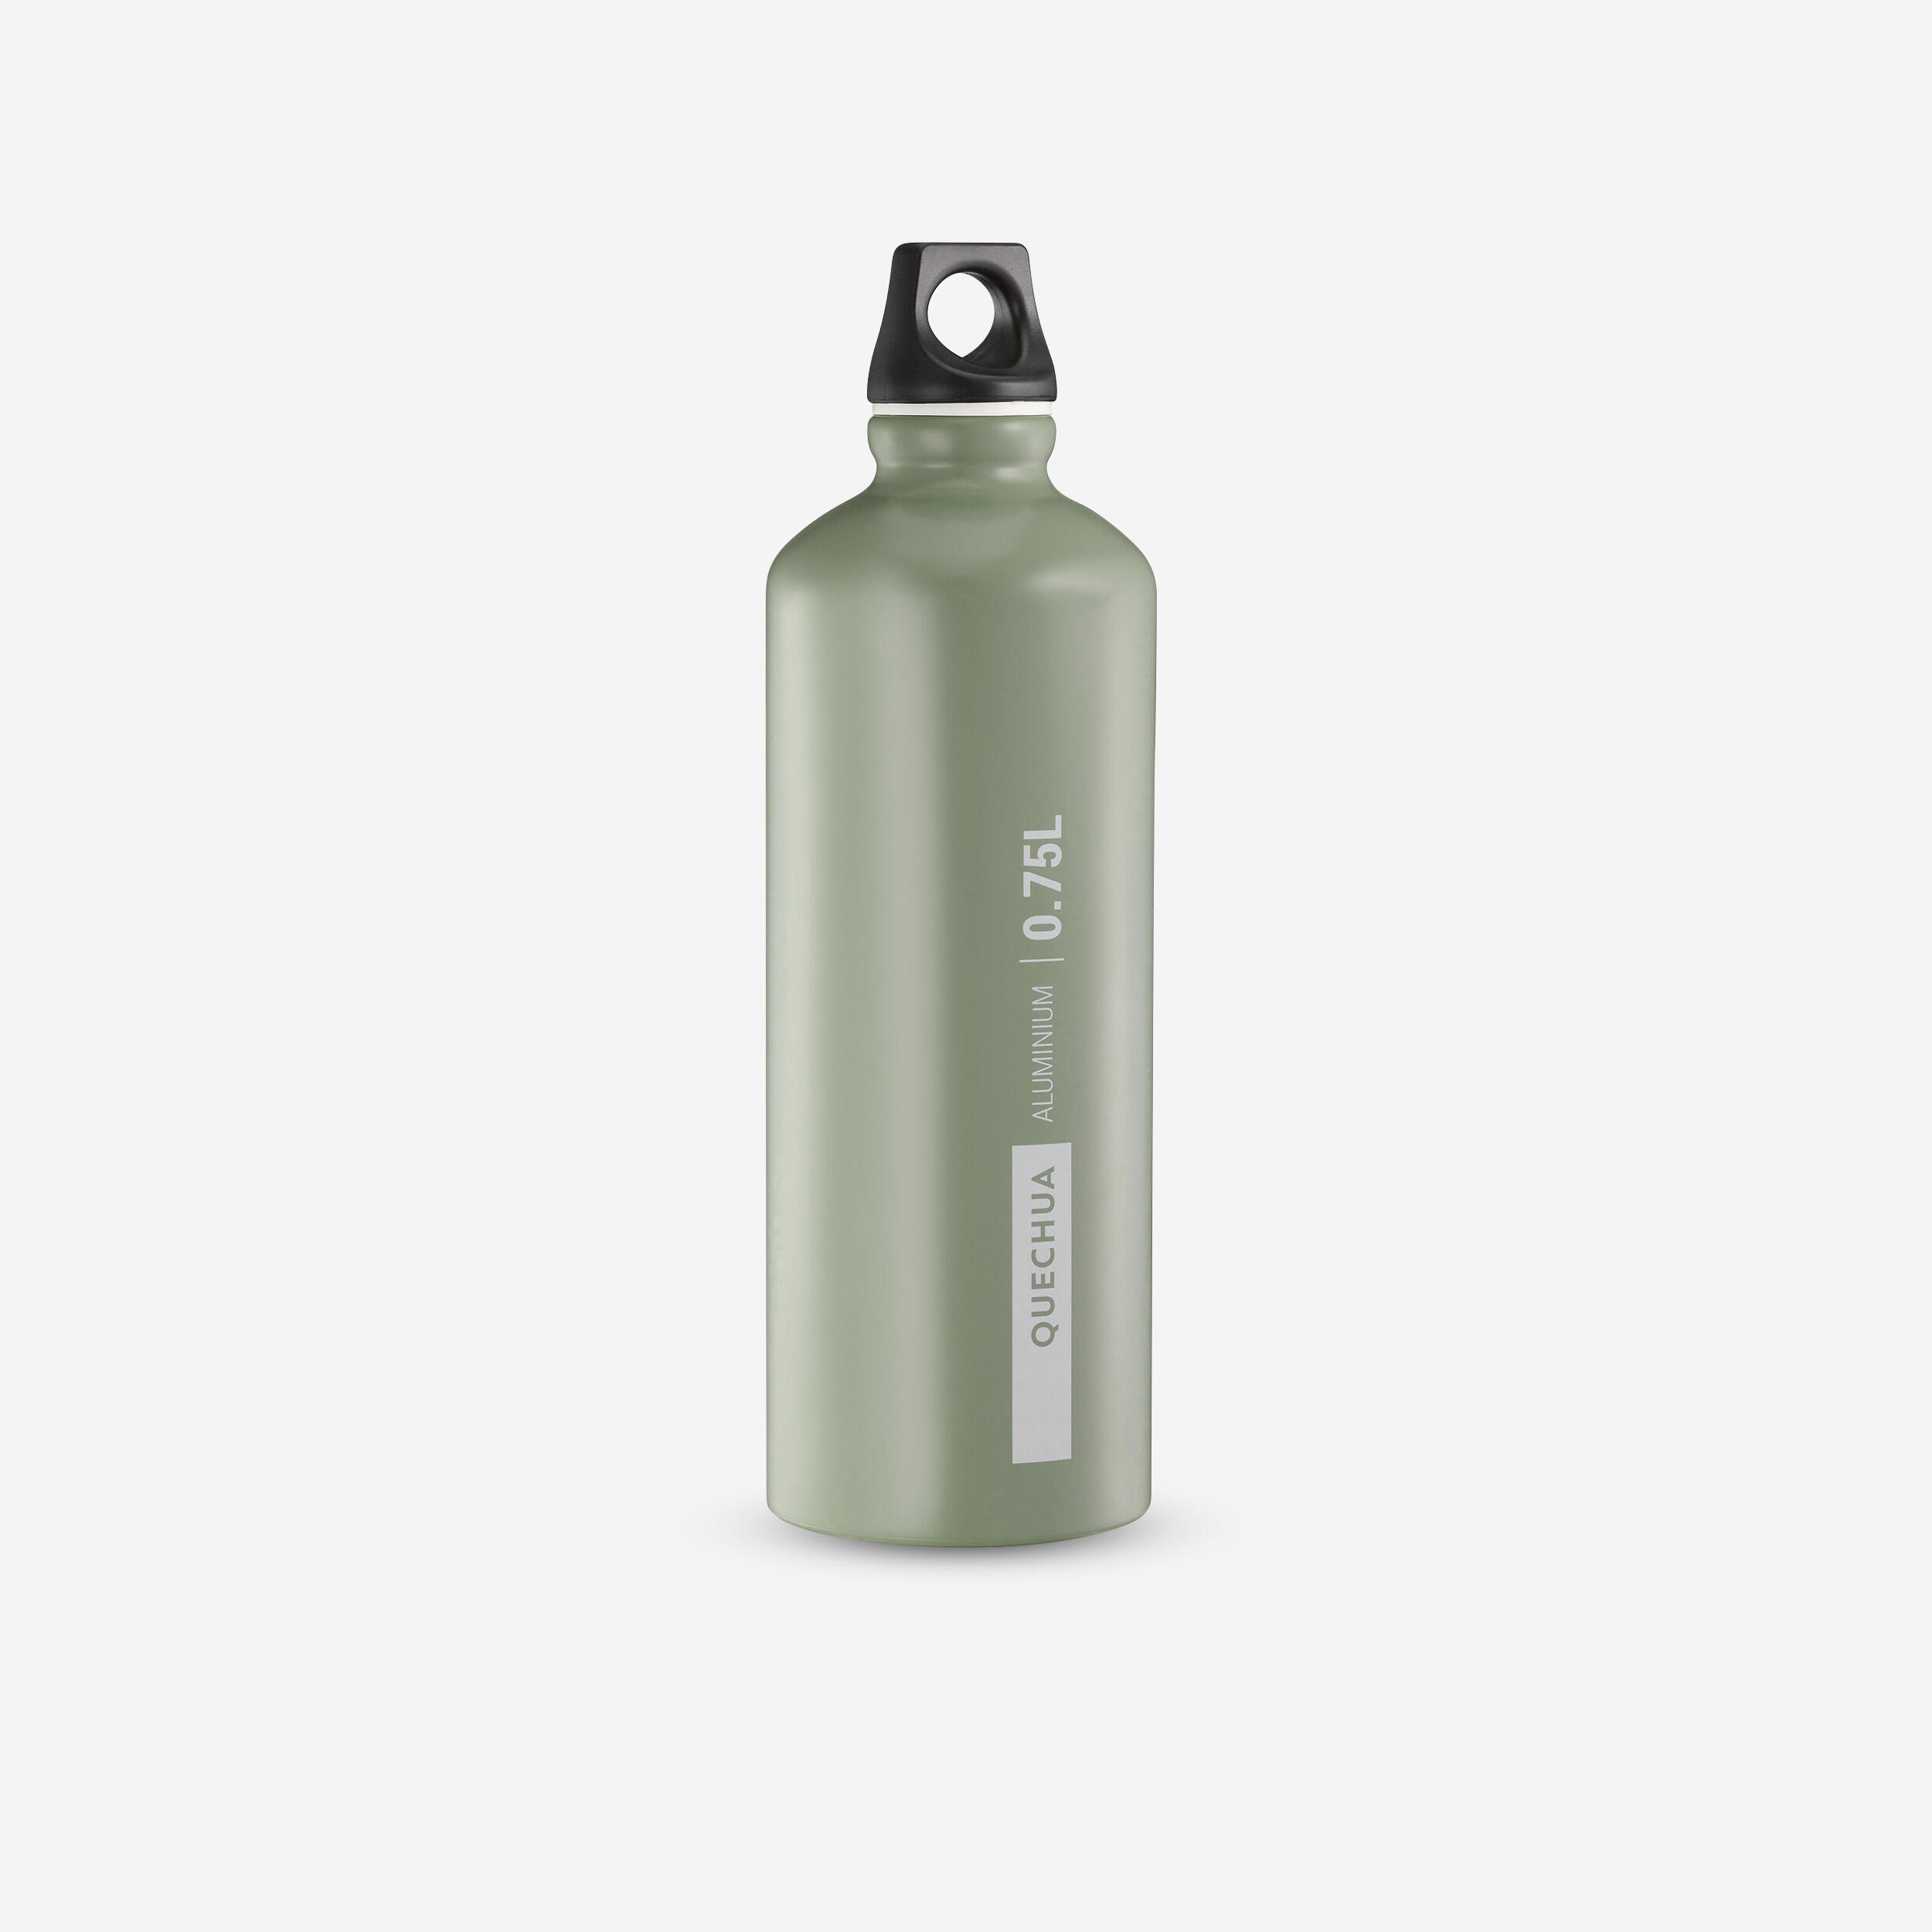 QUECHUA Aluminium Flask 0.75 L with Screw Cap for Hiking